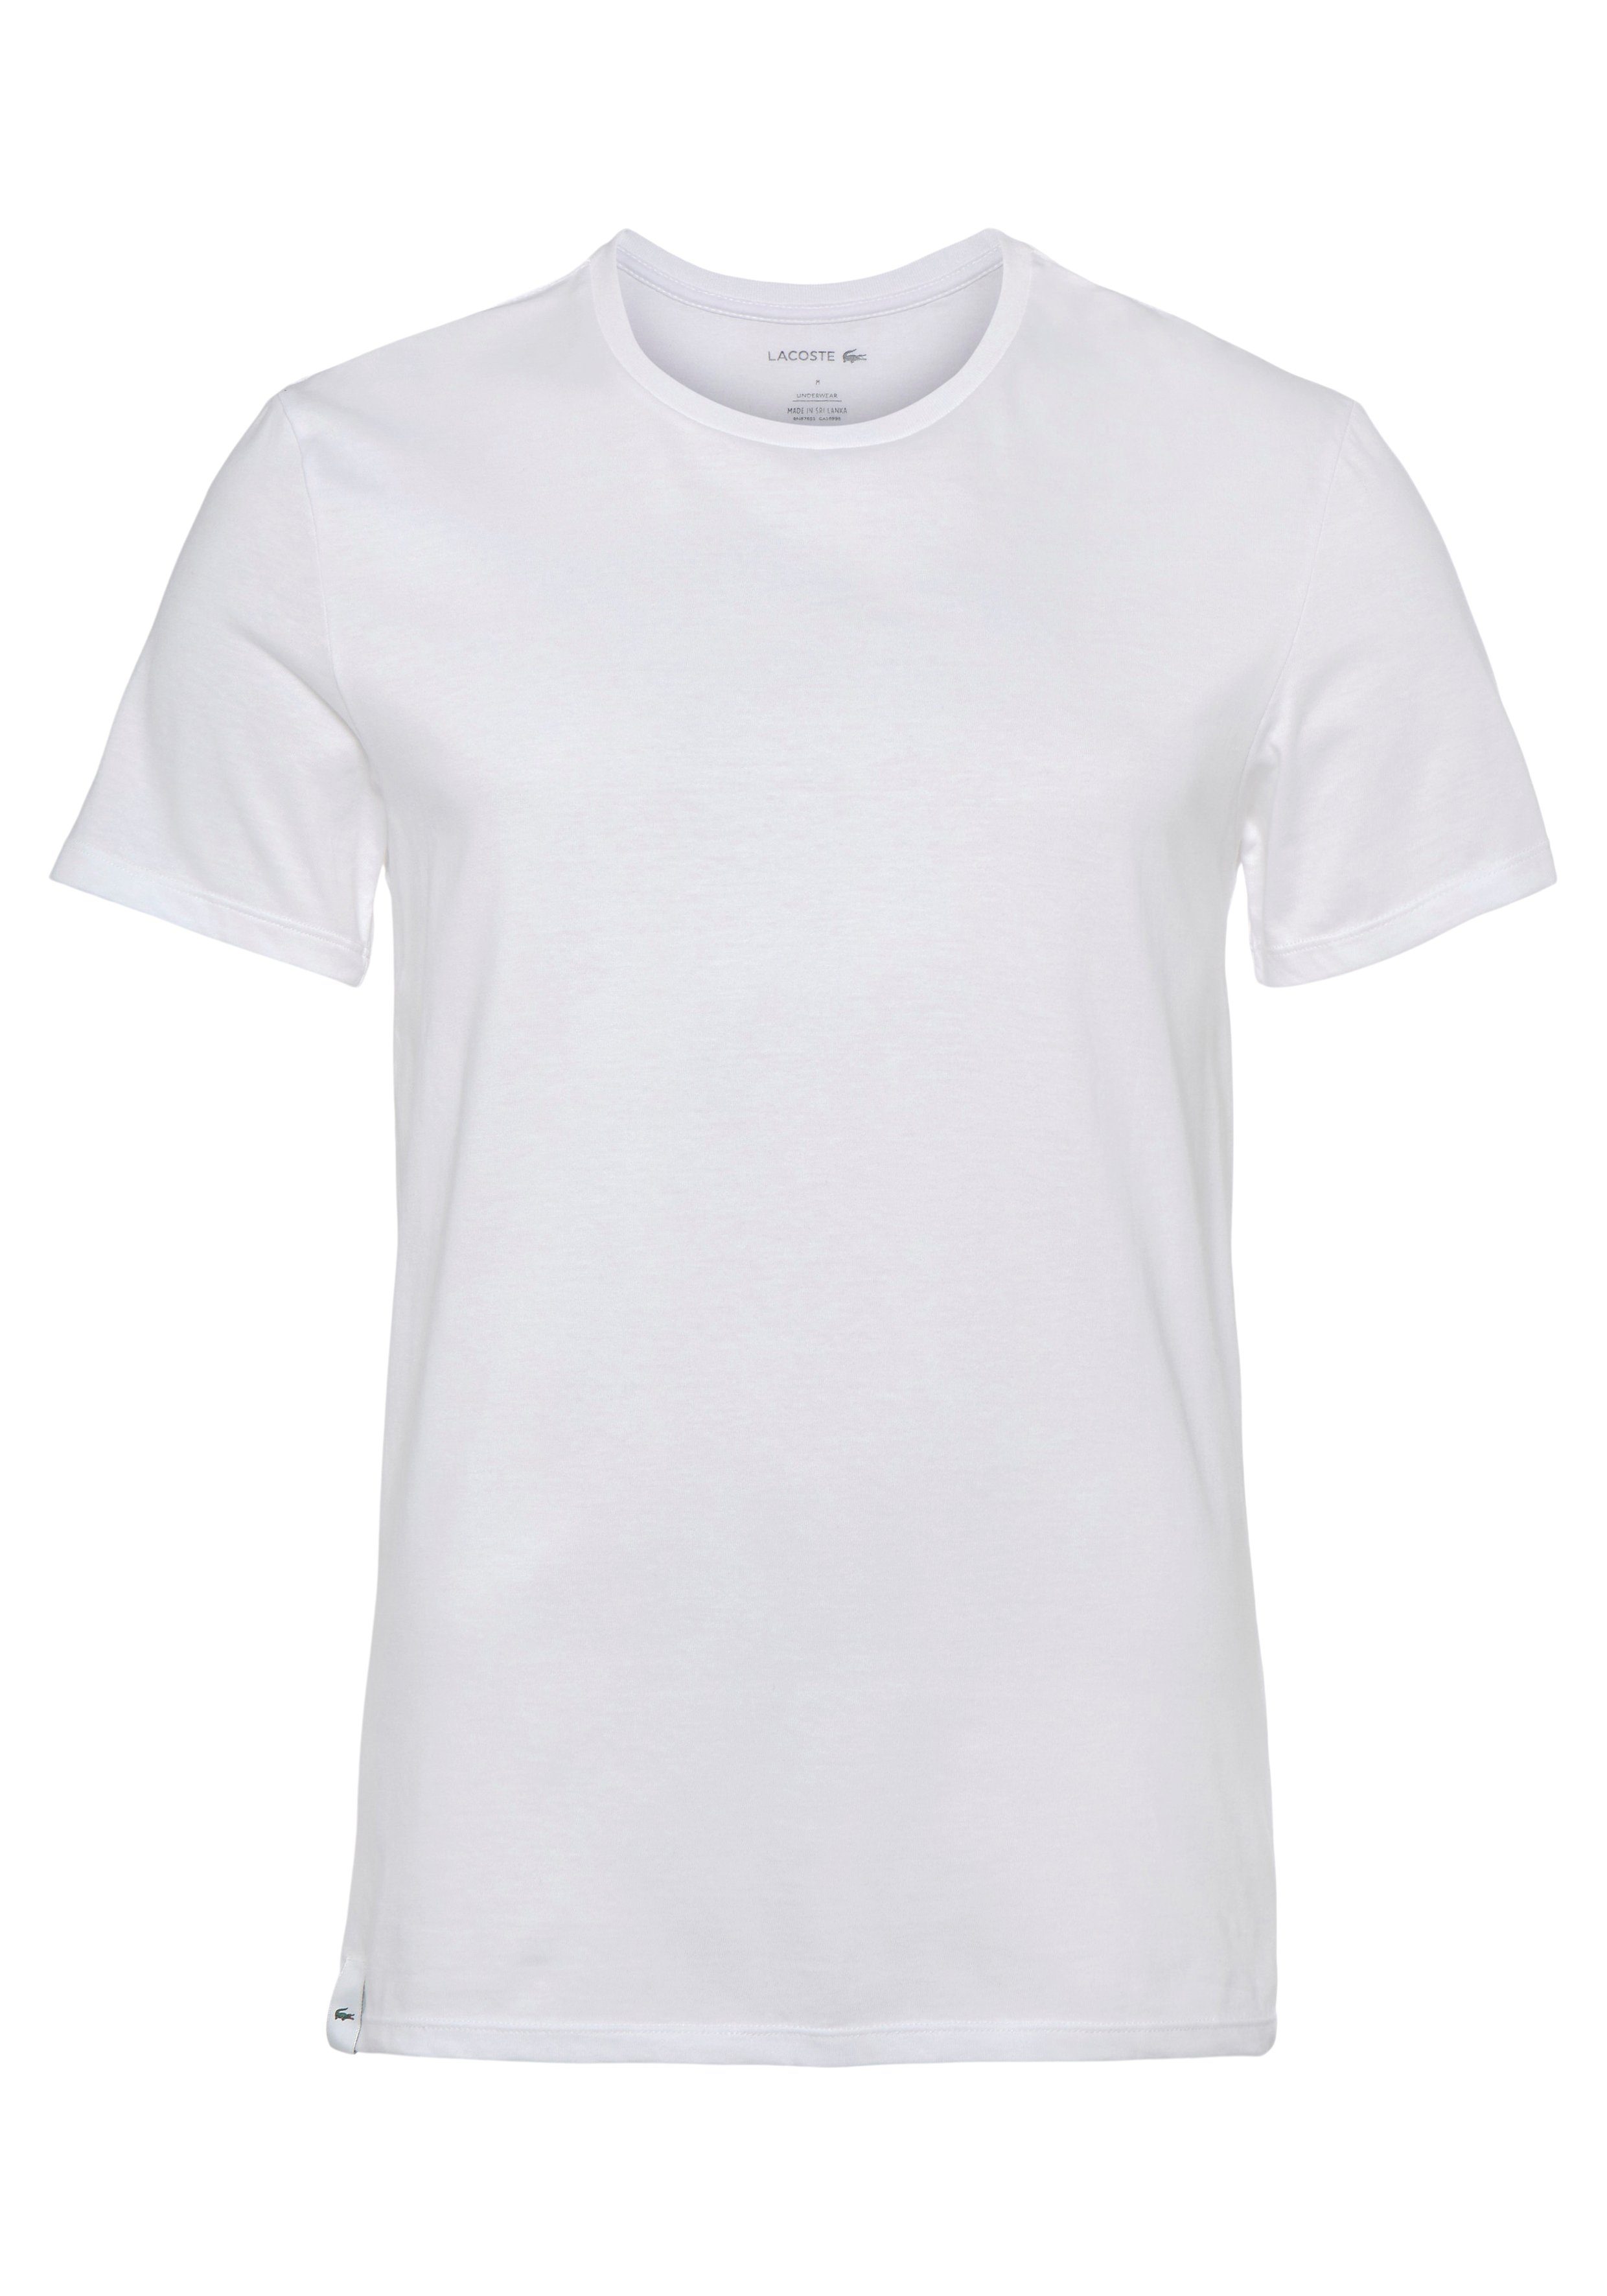 Hautgefühl grau T-Shirt weiß (3er-Pack) für angenehmes Lacoste Atmungsaktives schwarz Baumwollmaterial